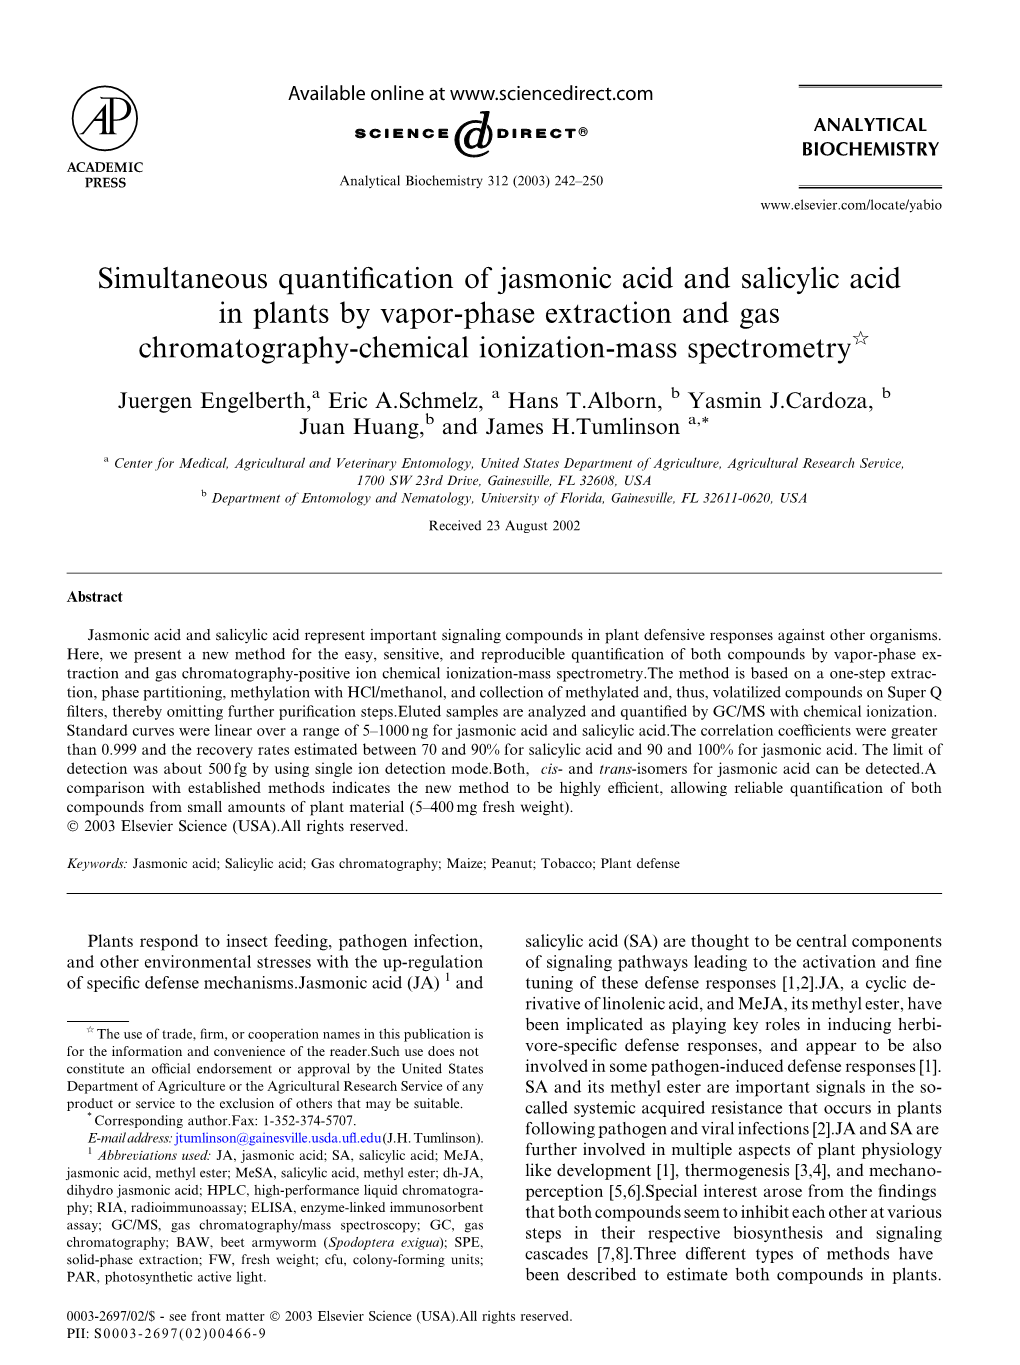 Simultaneous Quantification of Jasmonic Acid and Salicylic